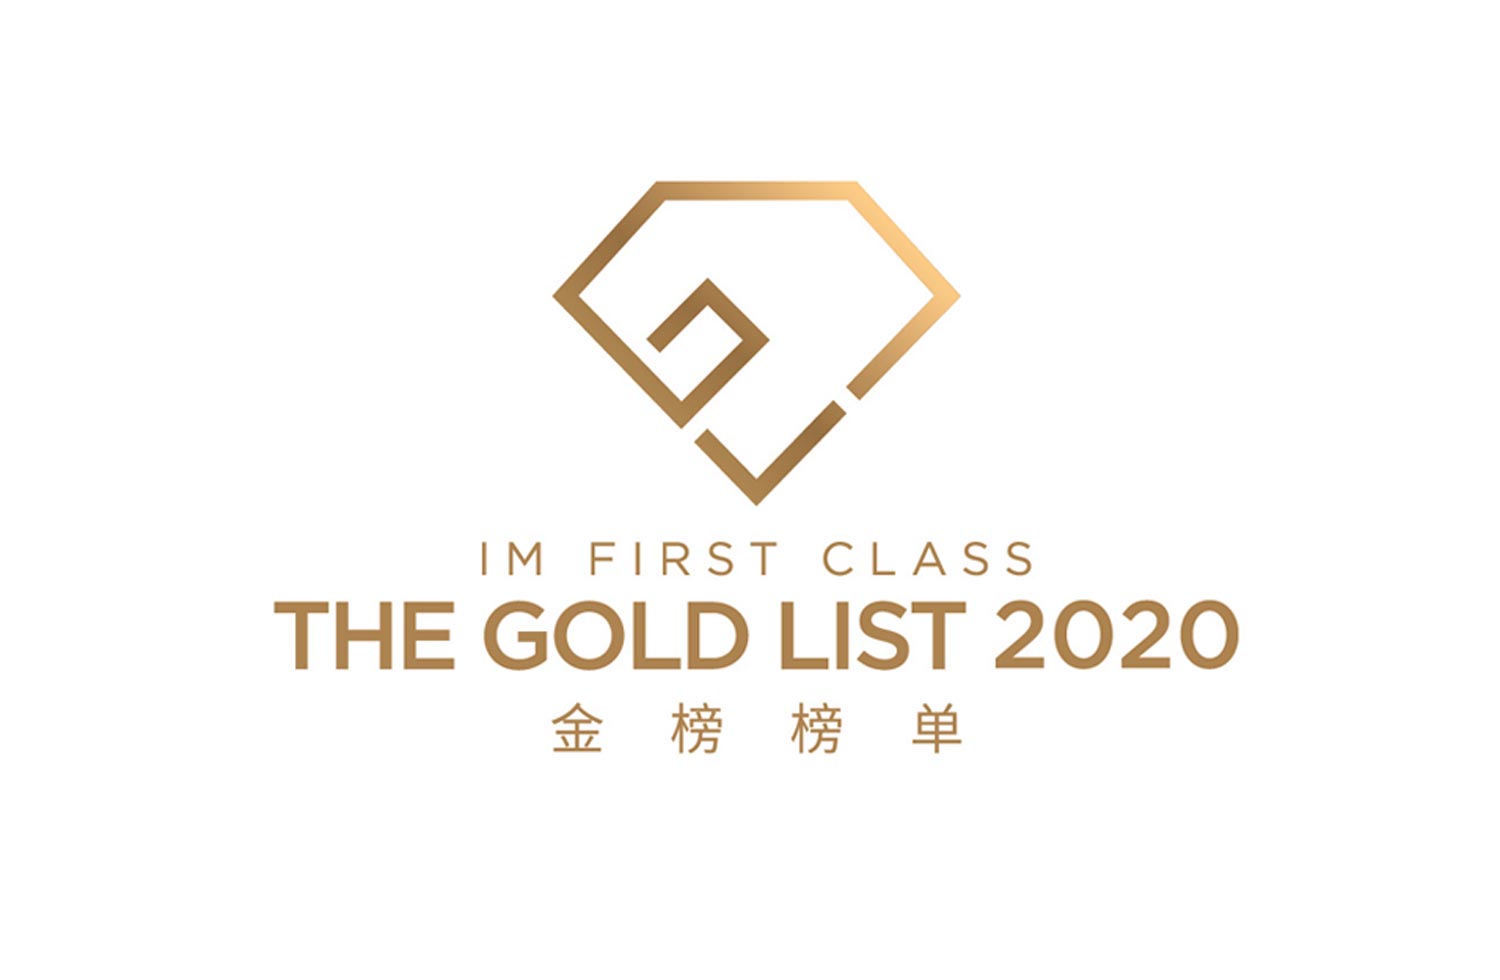 IM First Class奢华双语旅游杂志精选首届2020 金榜榜单